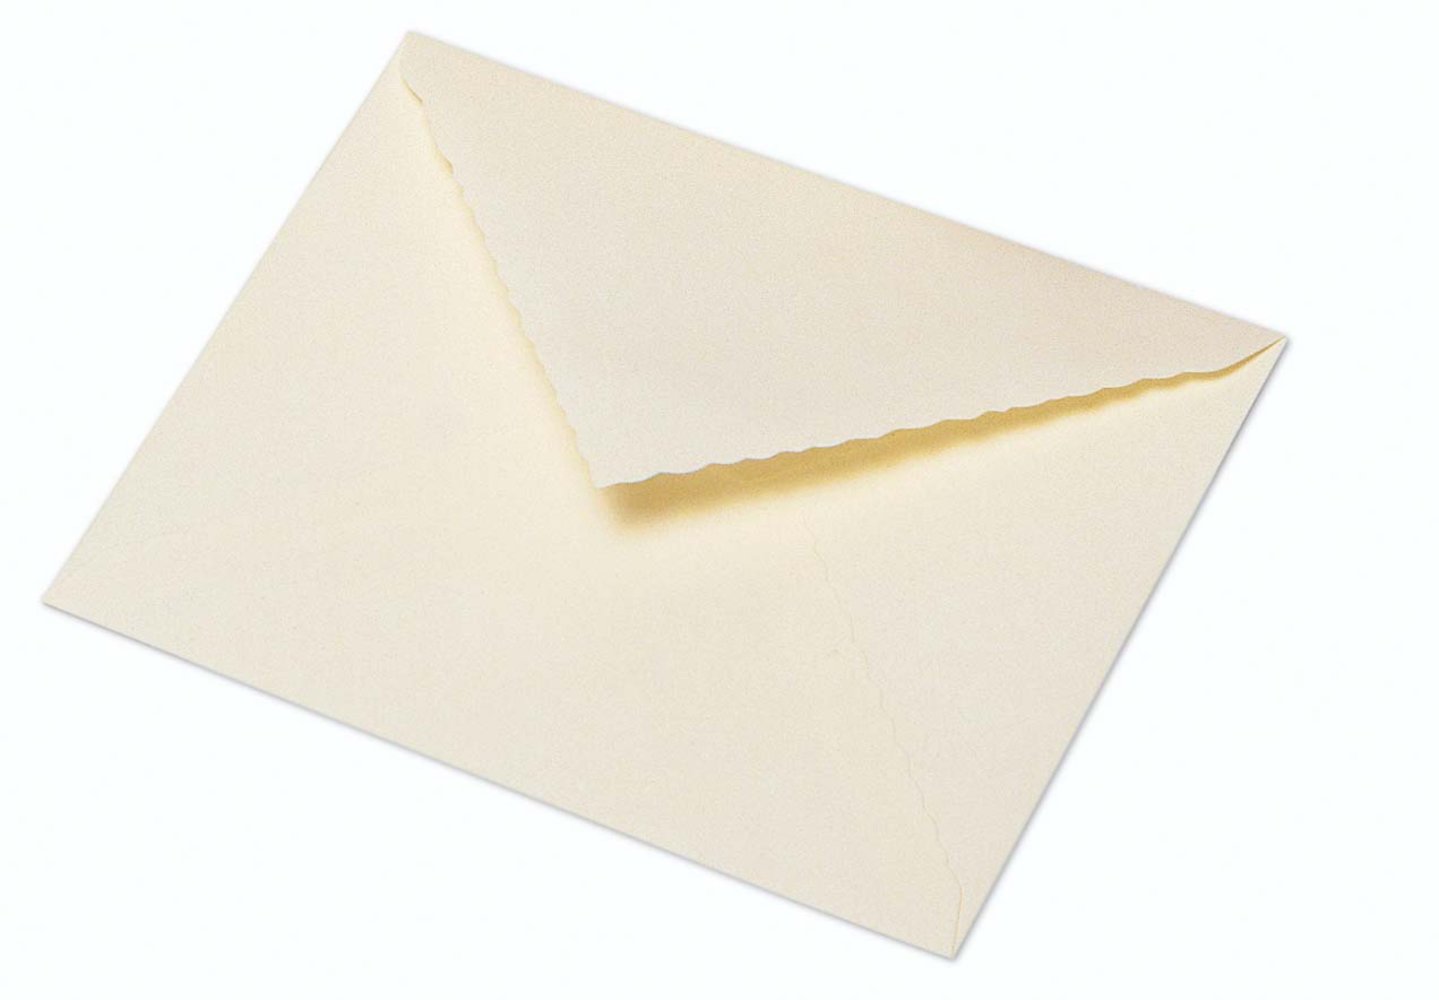 G. Lalo Open Stock Deckle Edge French Wedding 8 1/2 x 6 Envelopes